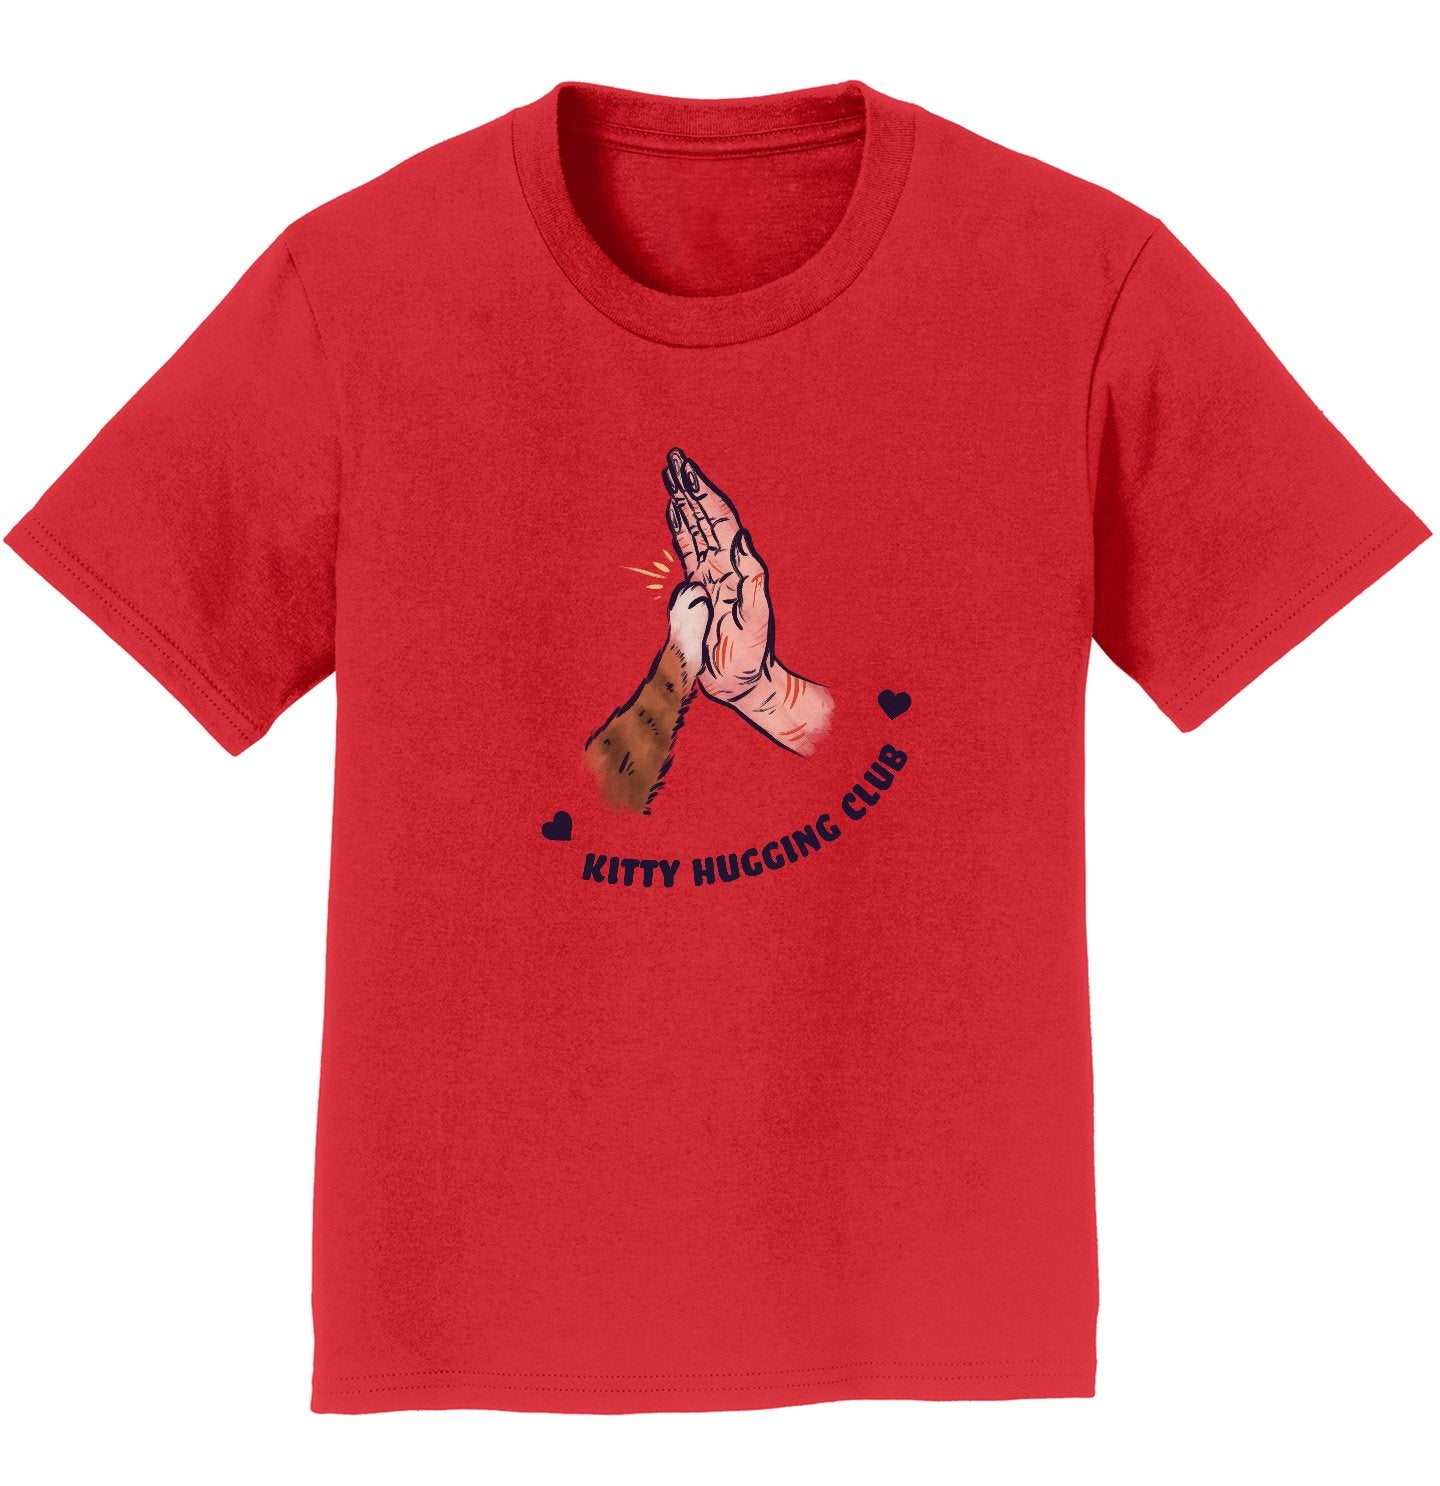 Kitty Hugging Club - Kids' Unisex T-Shirt